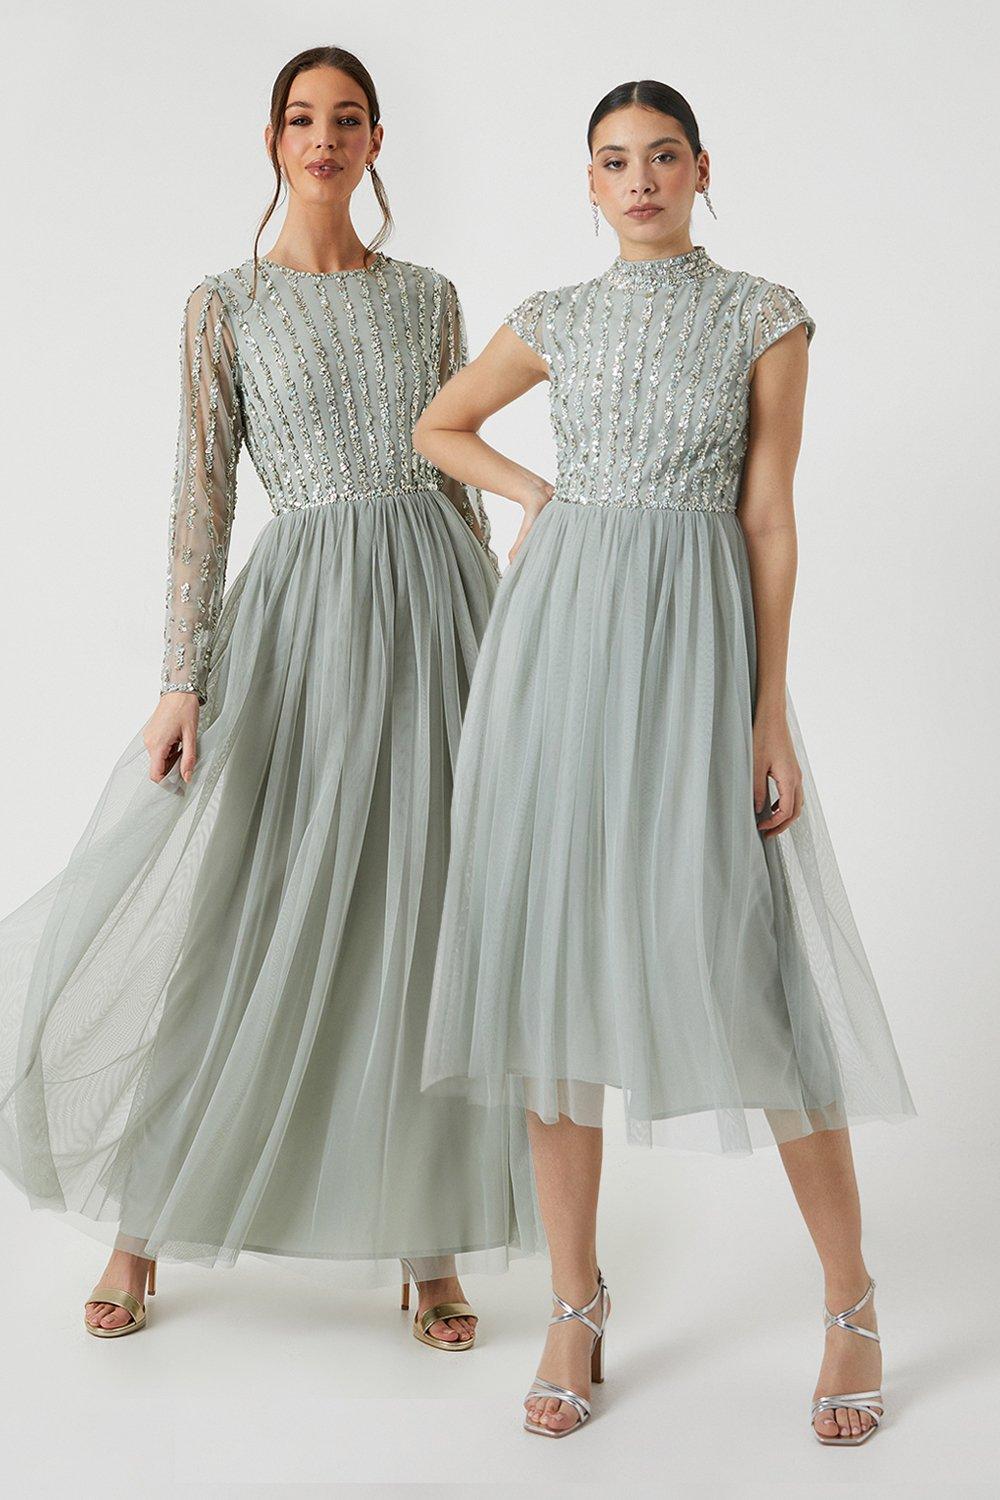 Linear Embellished Cap Sleeve Bridesmaids Dress - Sage